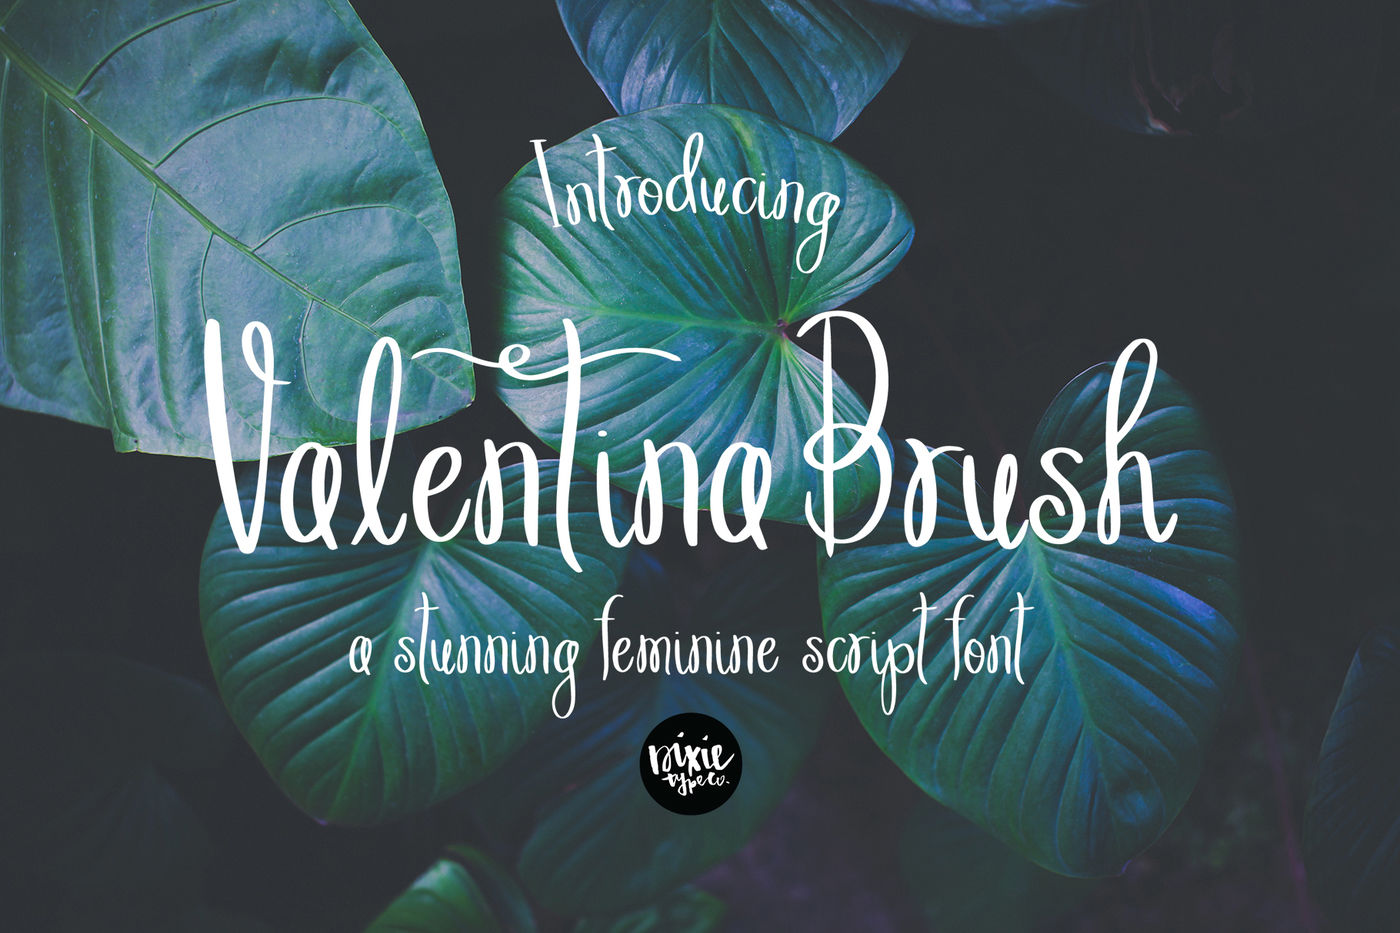 Valentina Brush Script Font By Dixie Type Co Thehungryjpeg Com